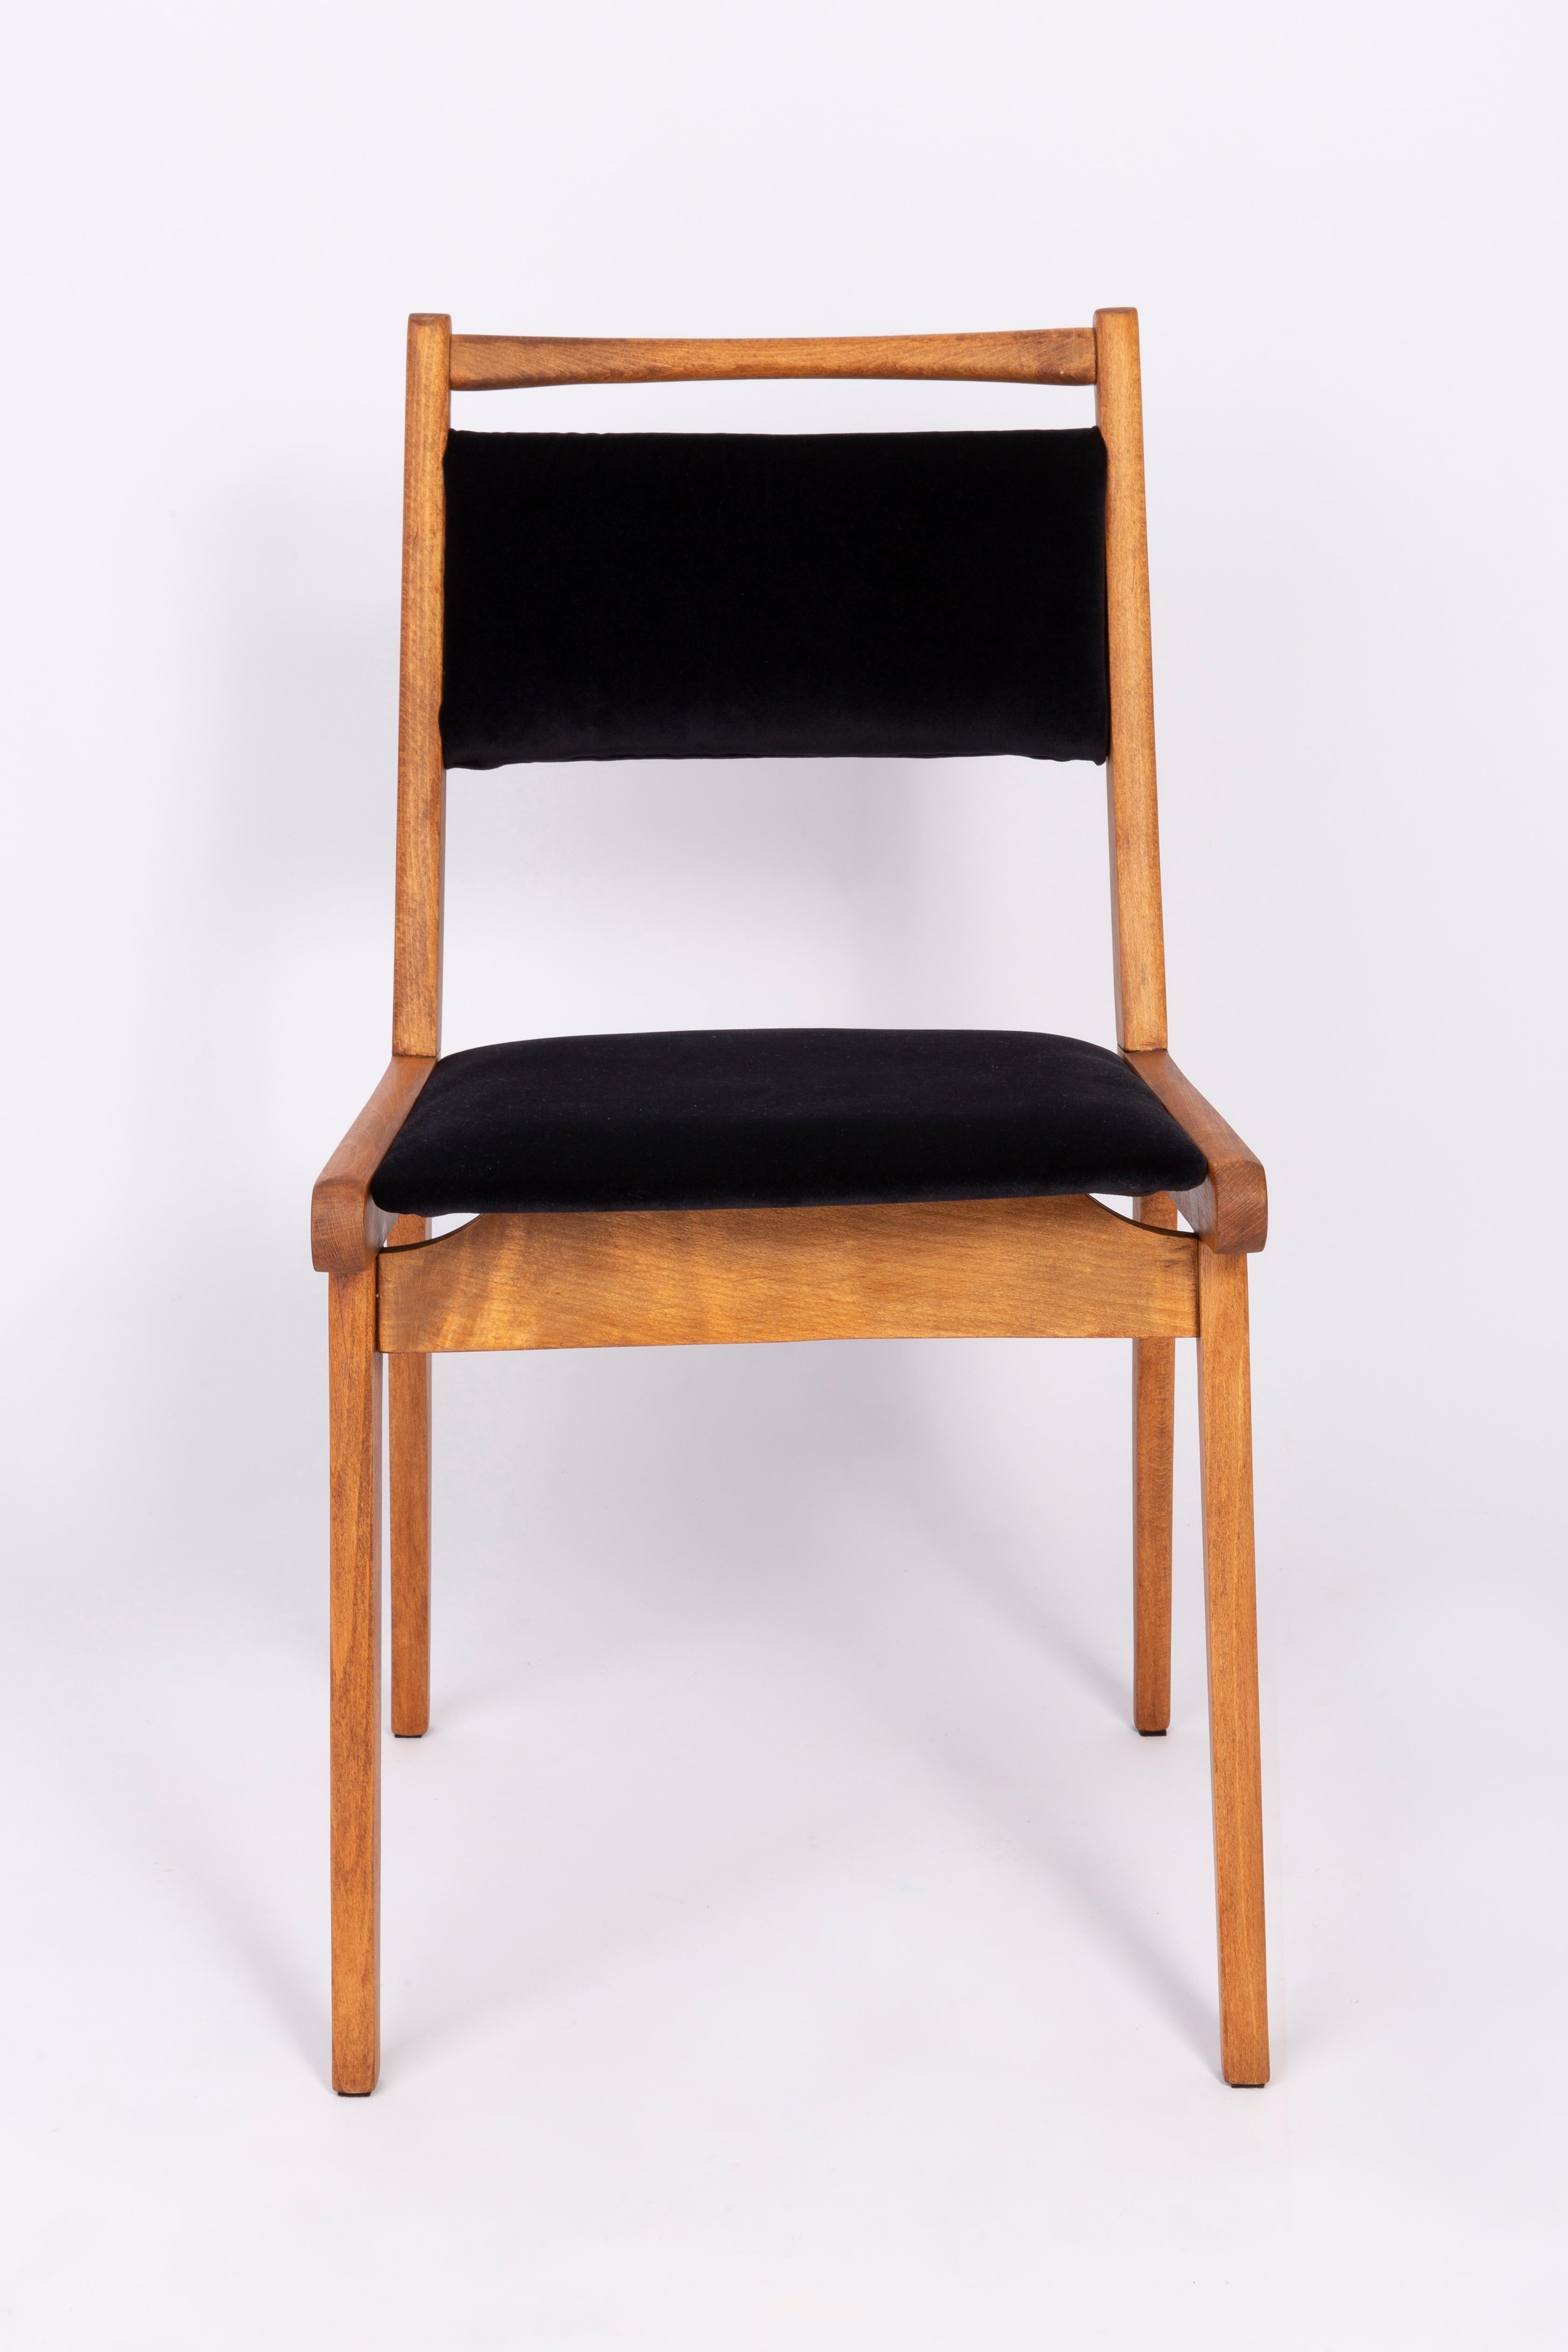 Set of Eight 20th Century Black Velvet Chairs, Poland, 1960s For Sale 4